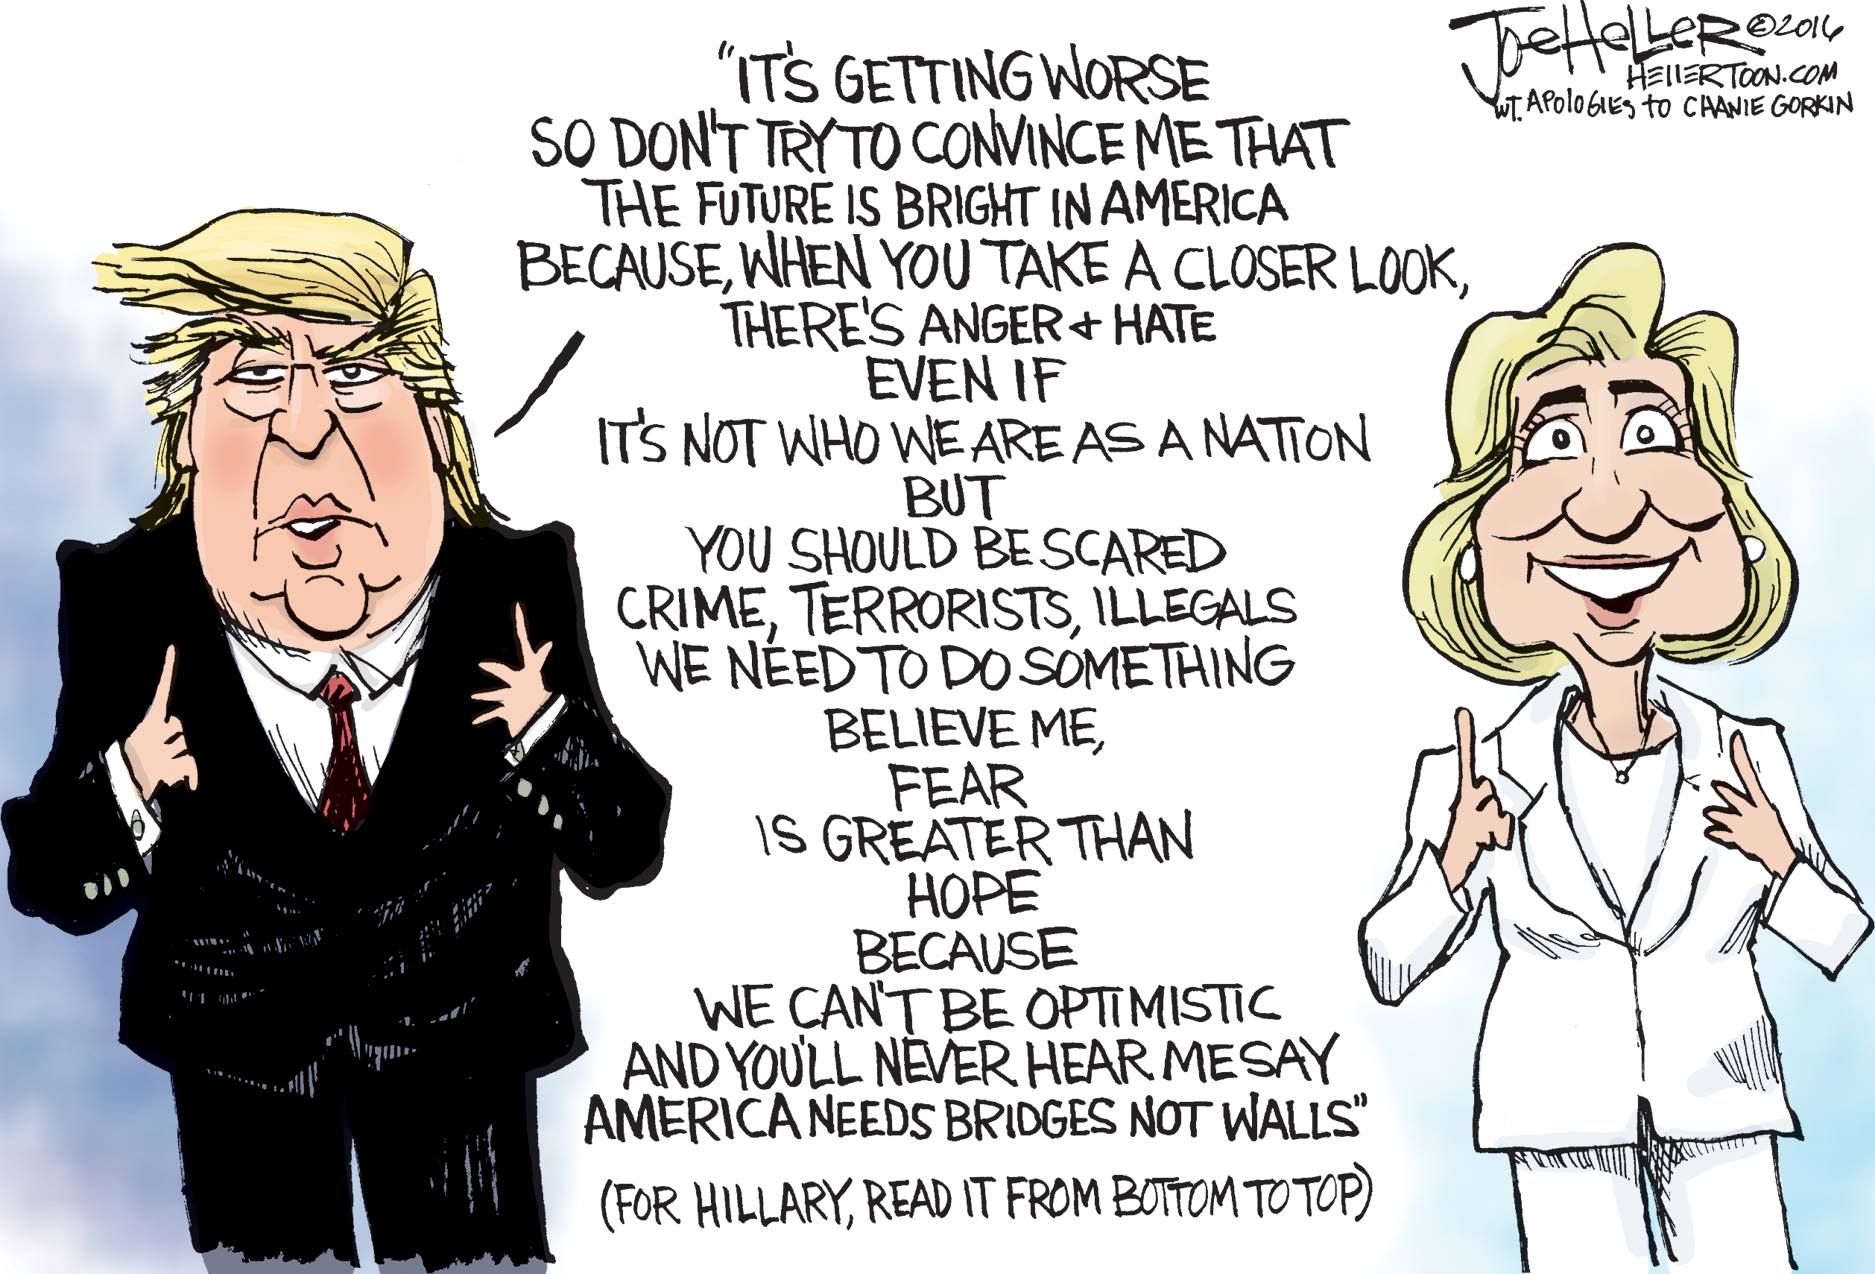 Le discours de Donald Trump vs Hillary Cliton